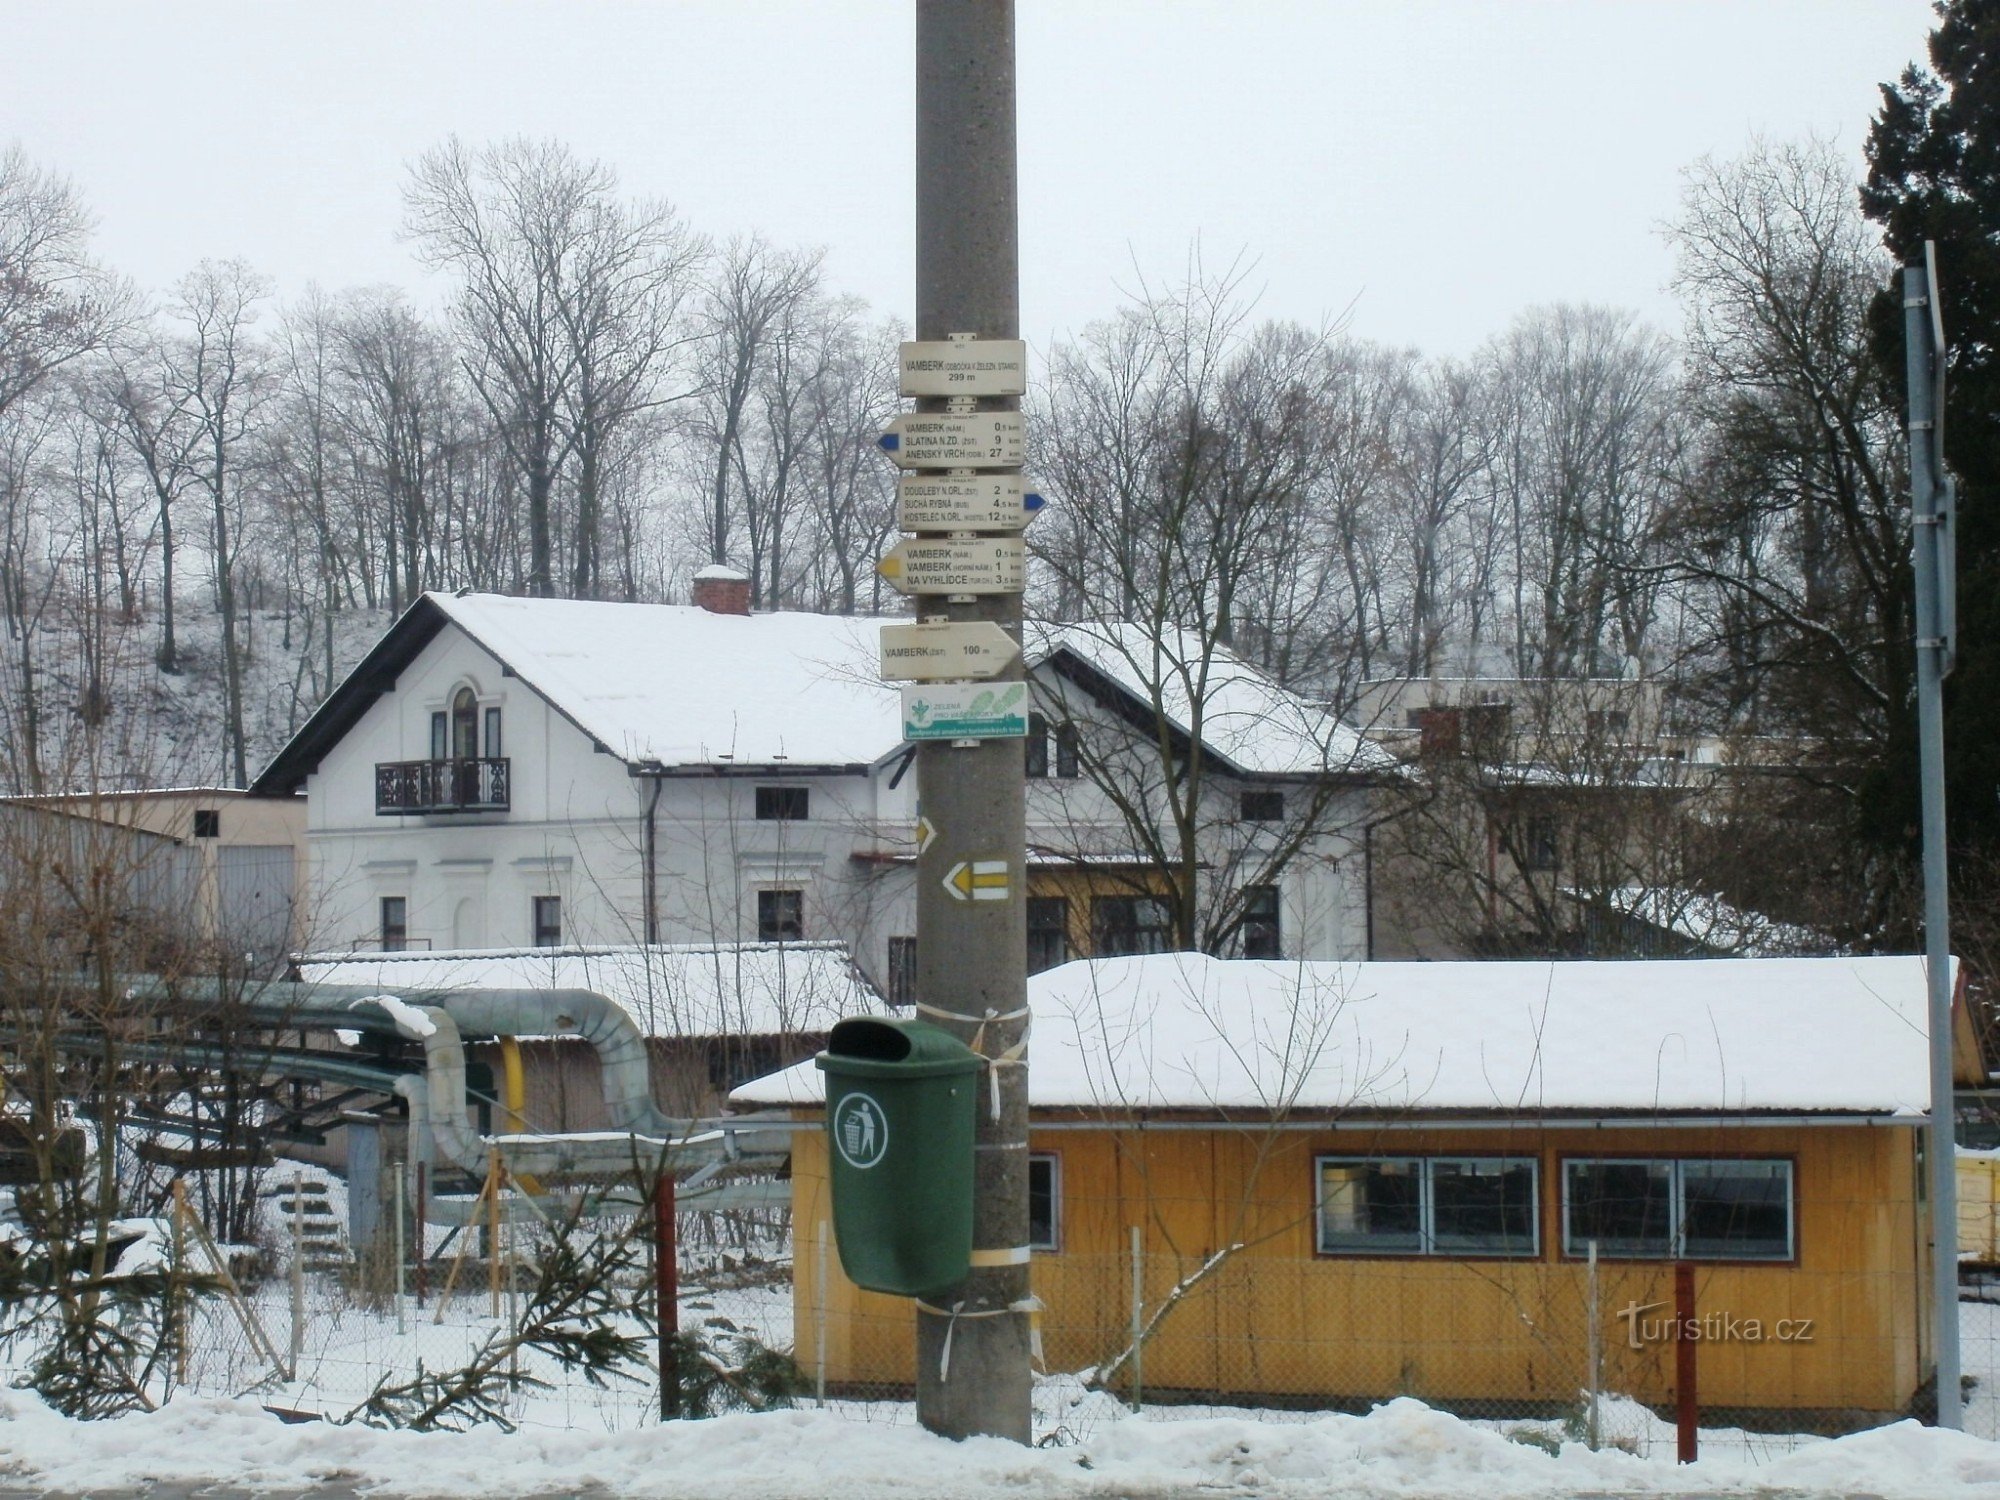 tourist junction Vamberk - railway station